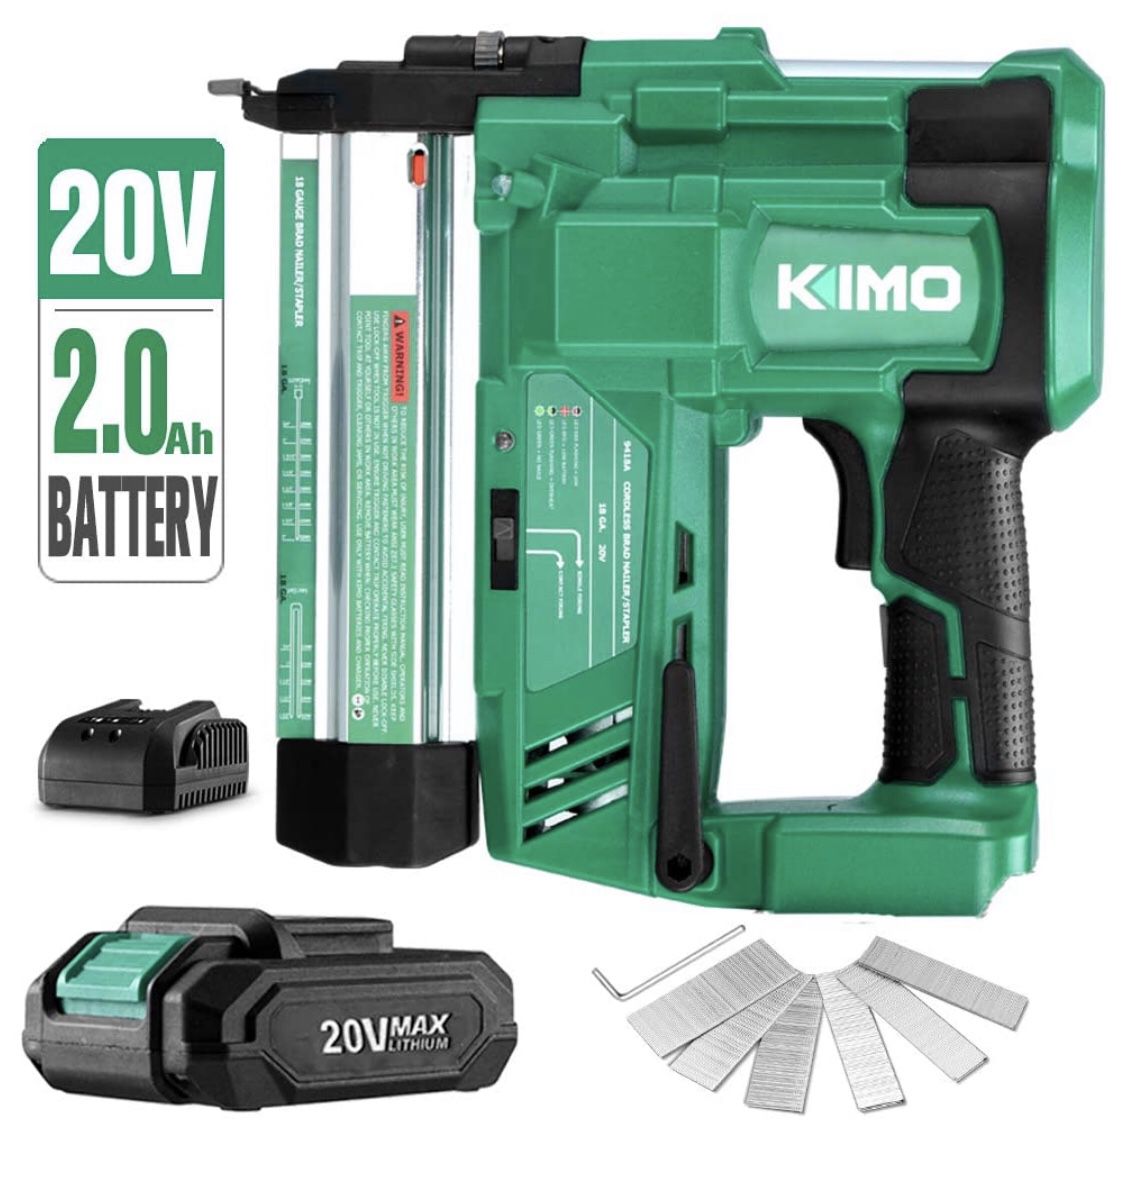 KIMO 20V 18 Gauge Cordless Brad Nailer/Stapler Kit, 2 in 1 Cordless Nail/Staple Gun w/Lithium-Ion Battery&Fast Charger, 18GA Nails/Staples, Single or